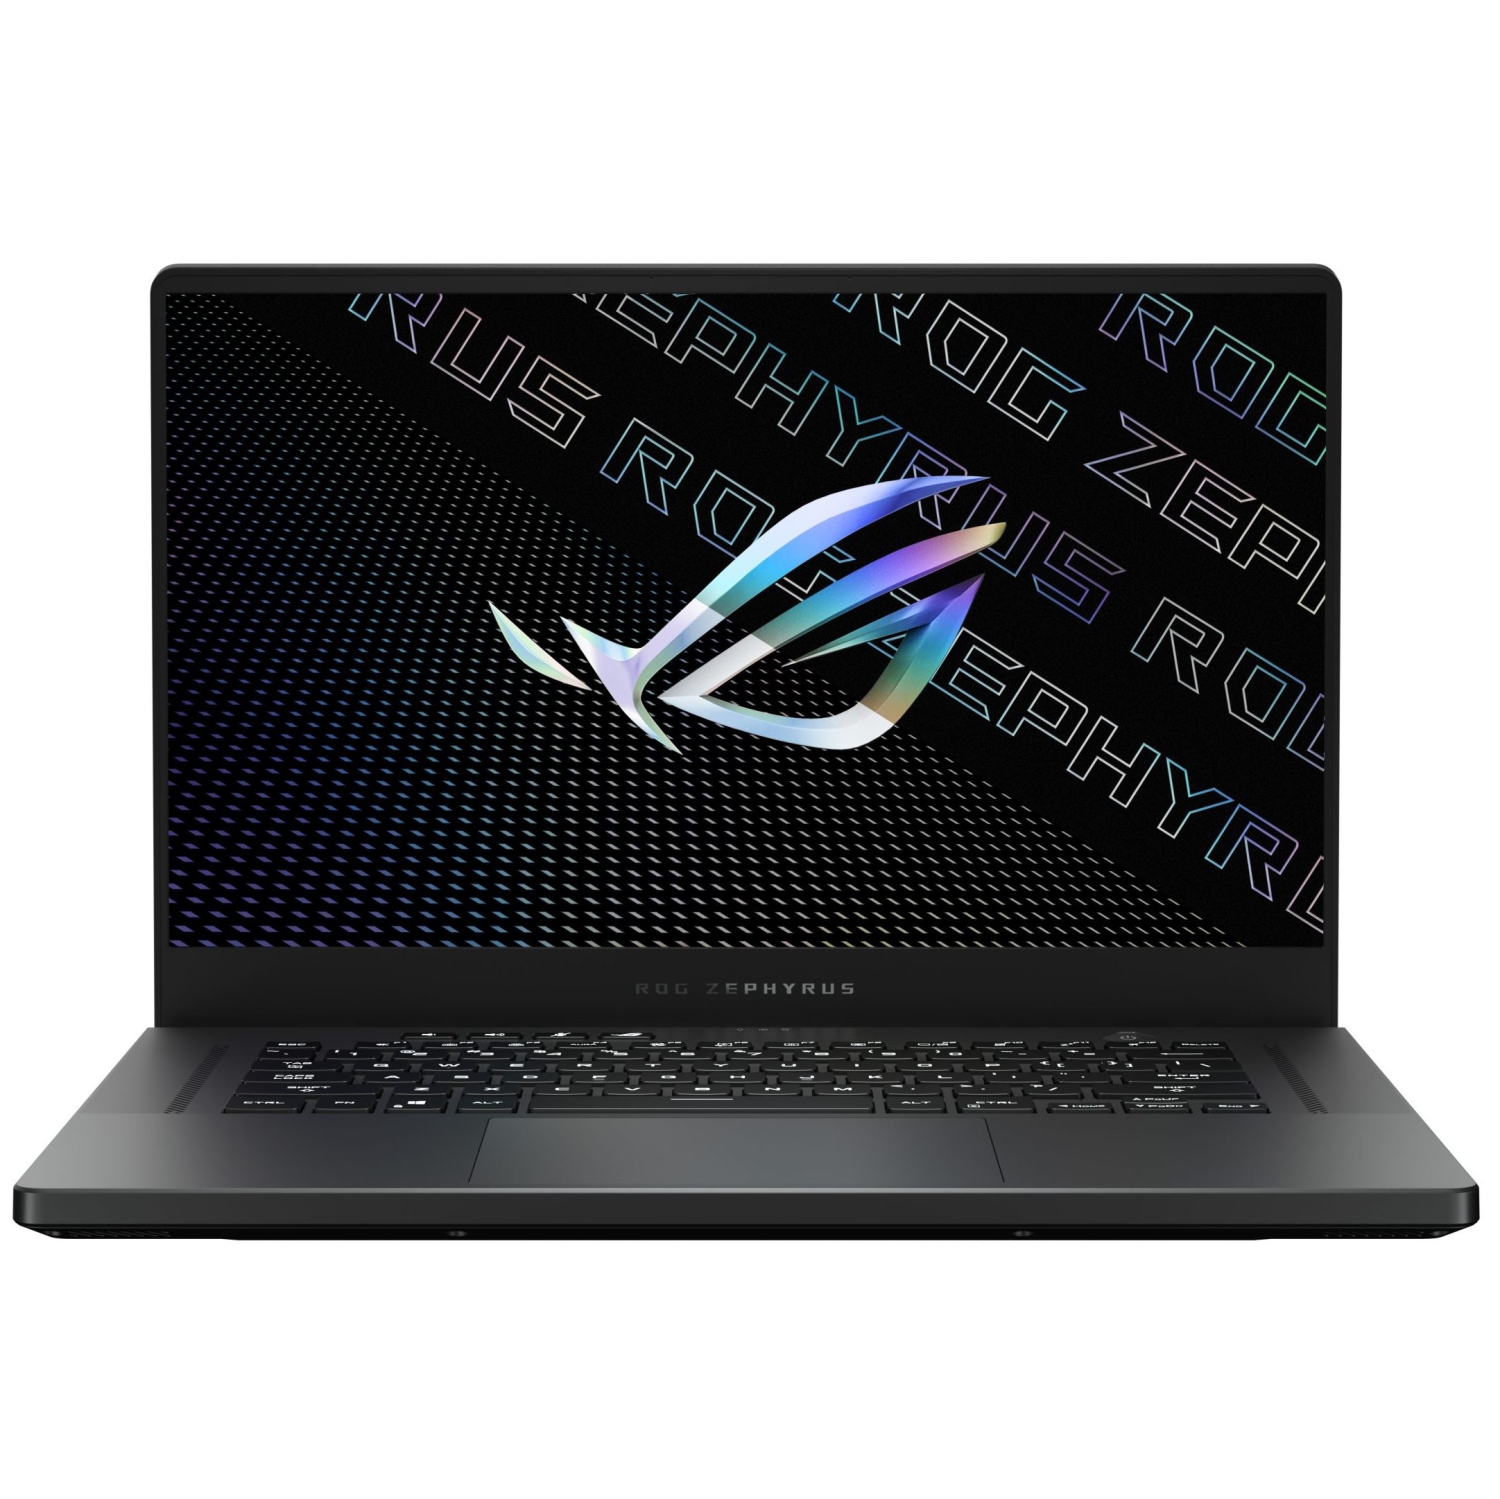 Custom ASUS ROG Zephyrus G15 Laptop (AMD Ryzen 9 5900HS, 40GB RAM, 2TB PCIe SSD, NVIDIA RTX 3070, Win 10 Pro)